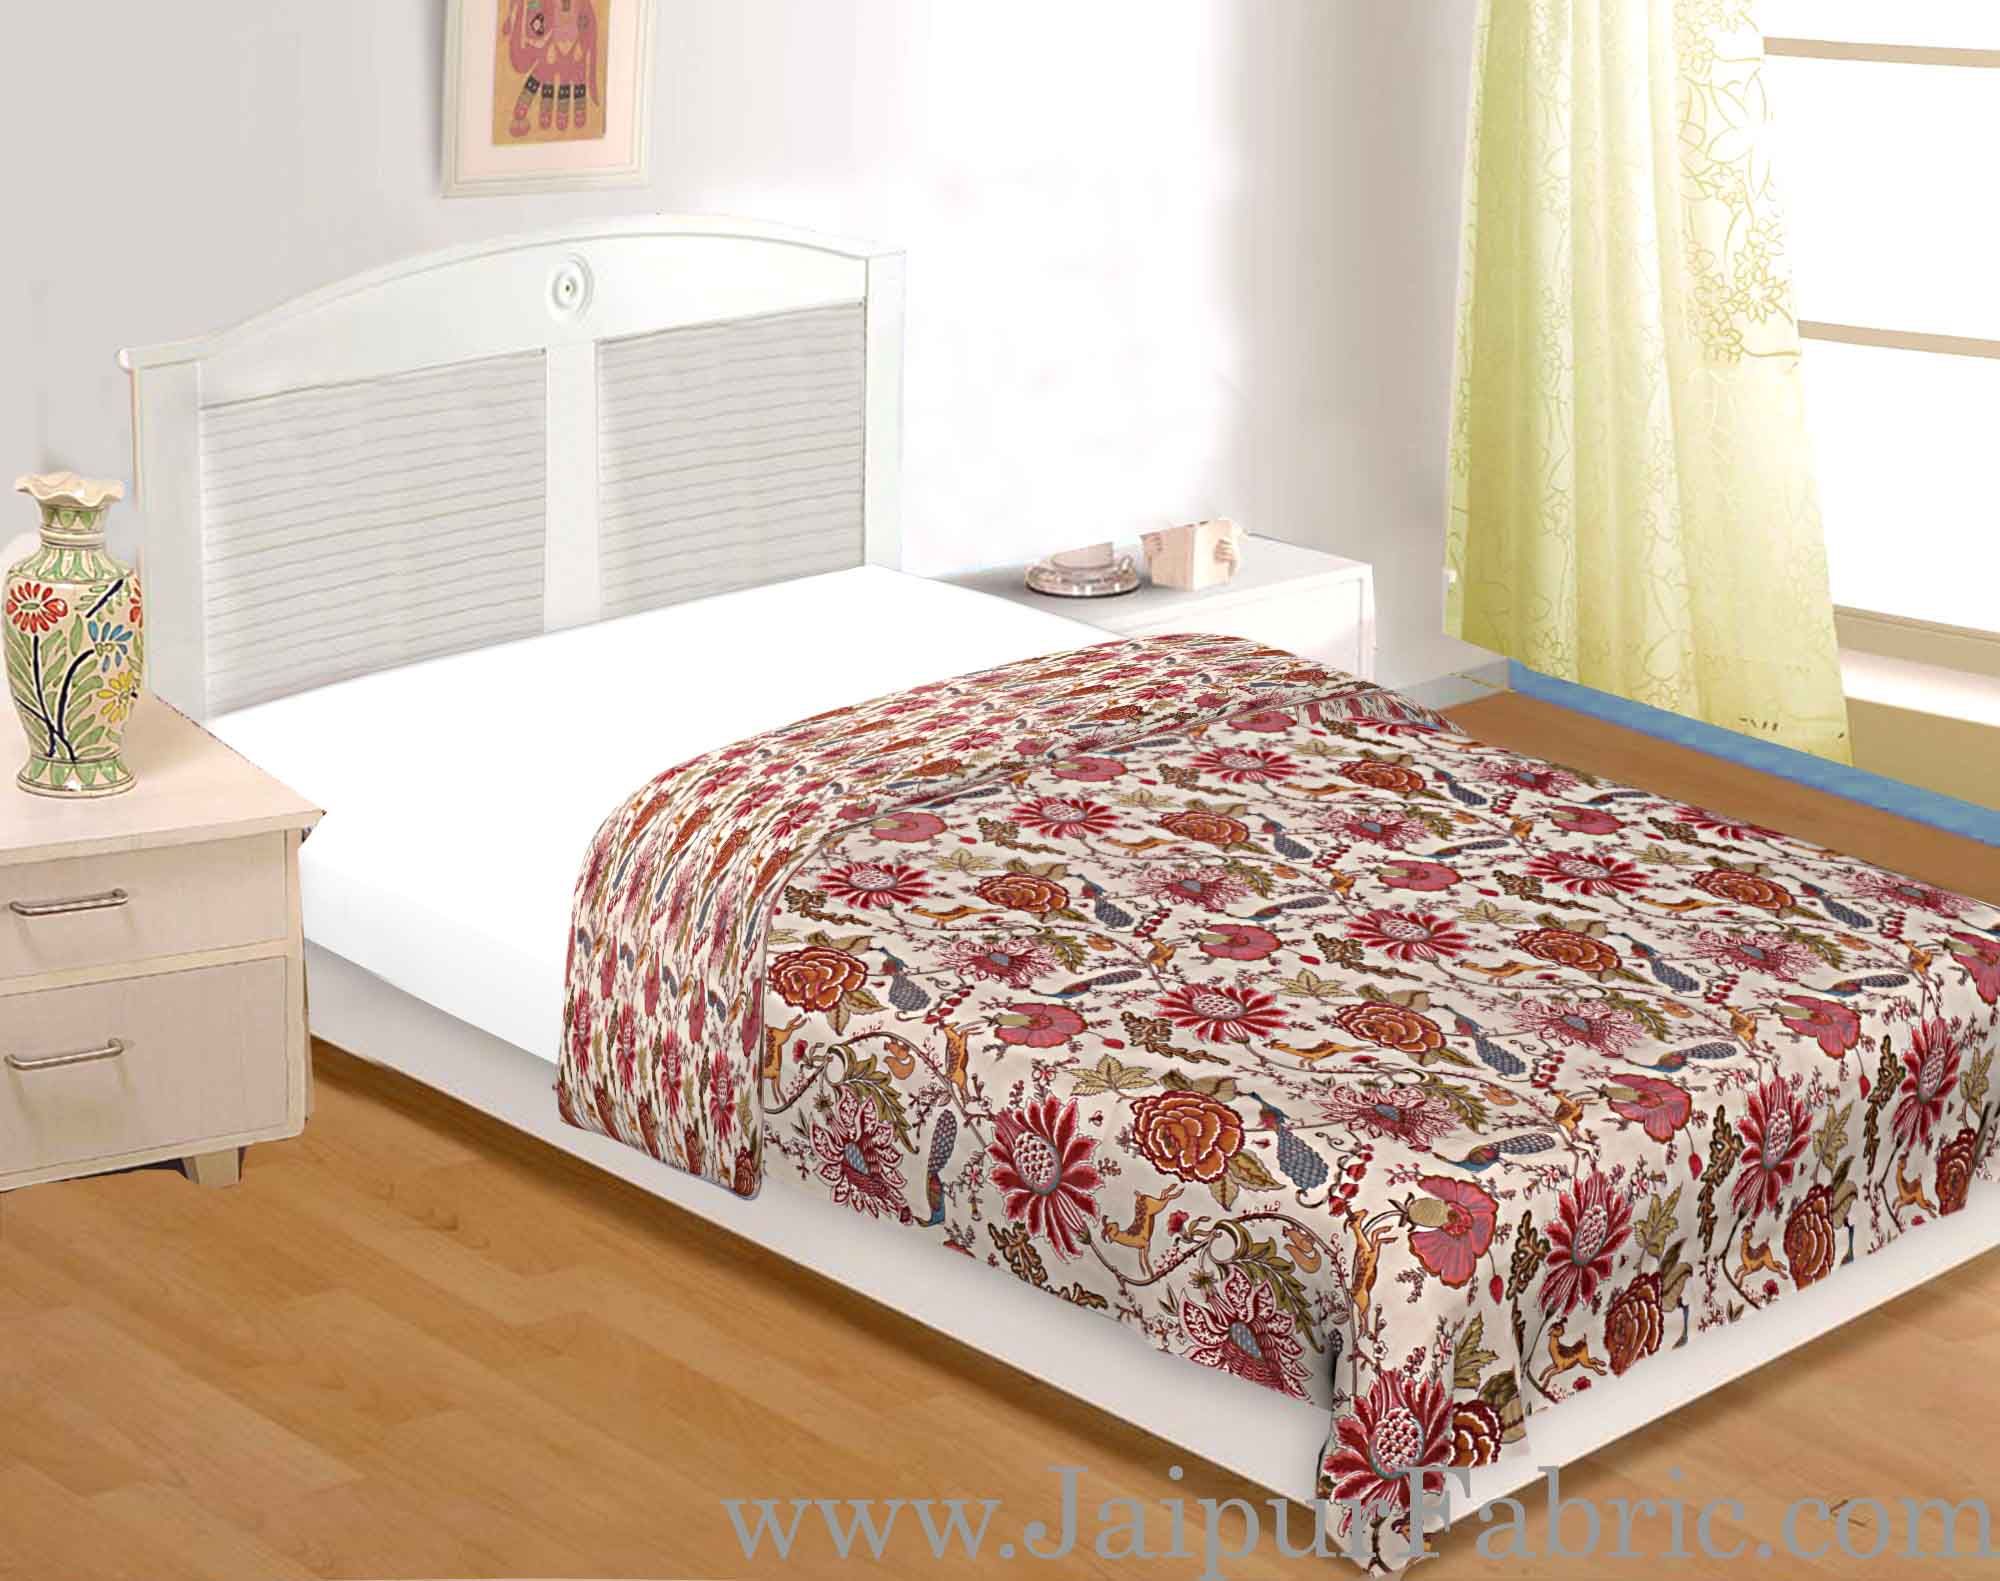 Muslin Cotton Single bed Reversible mulmul Dohar in pink floral motif print